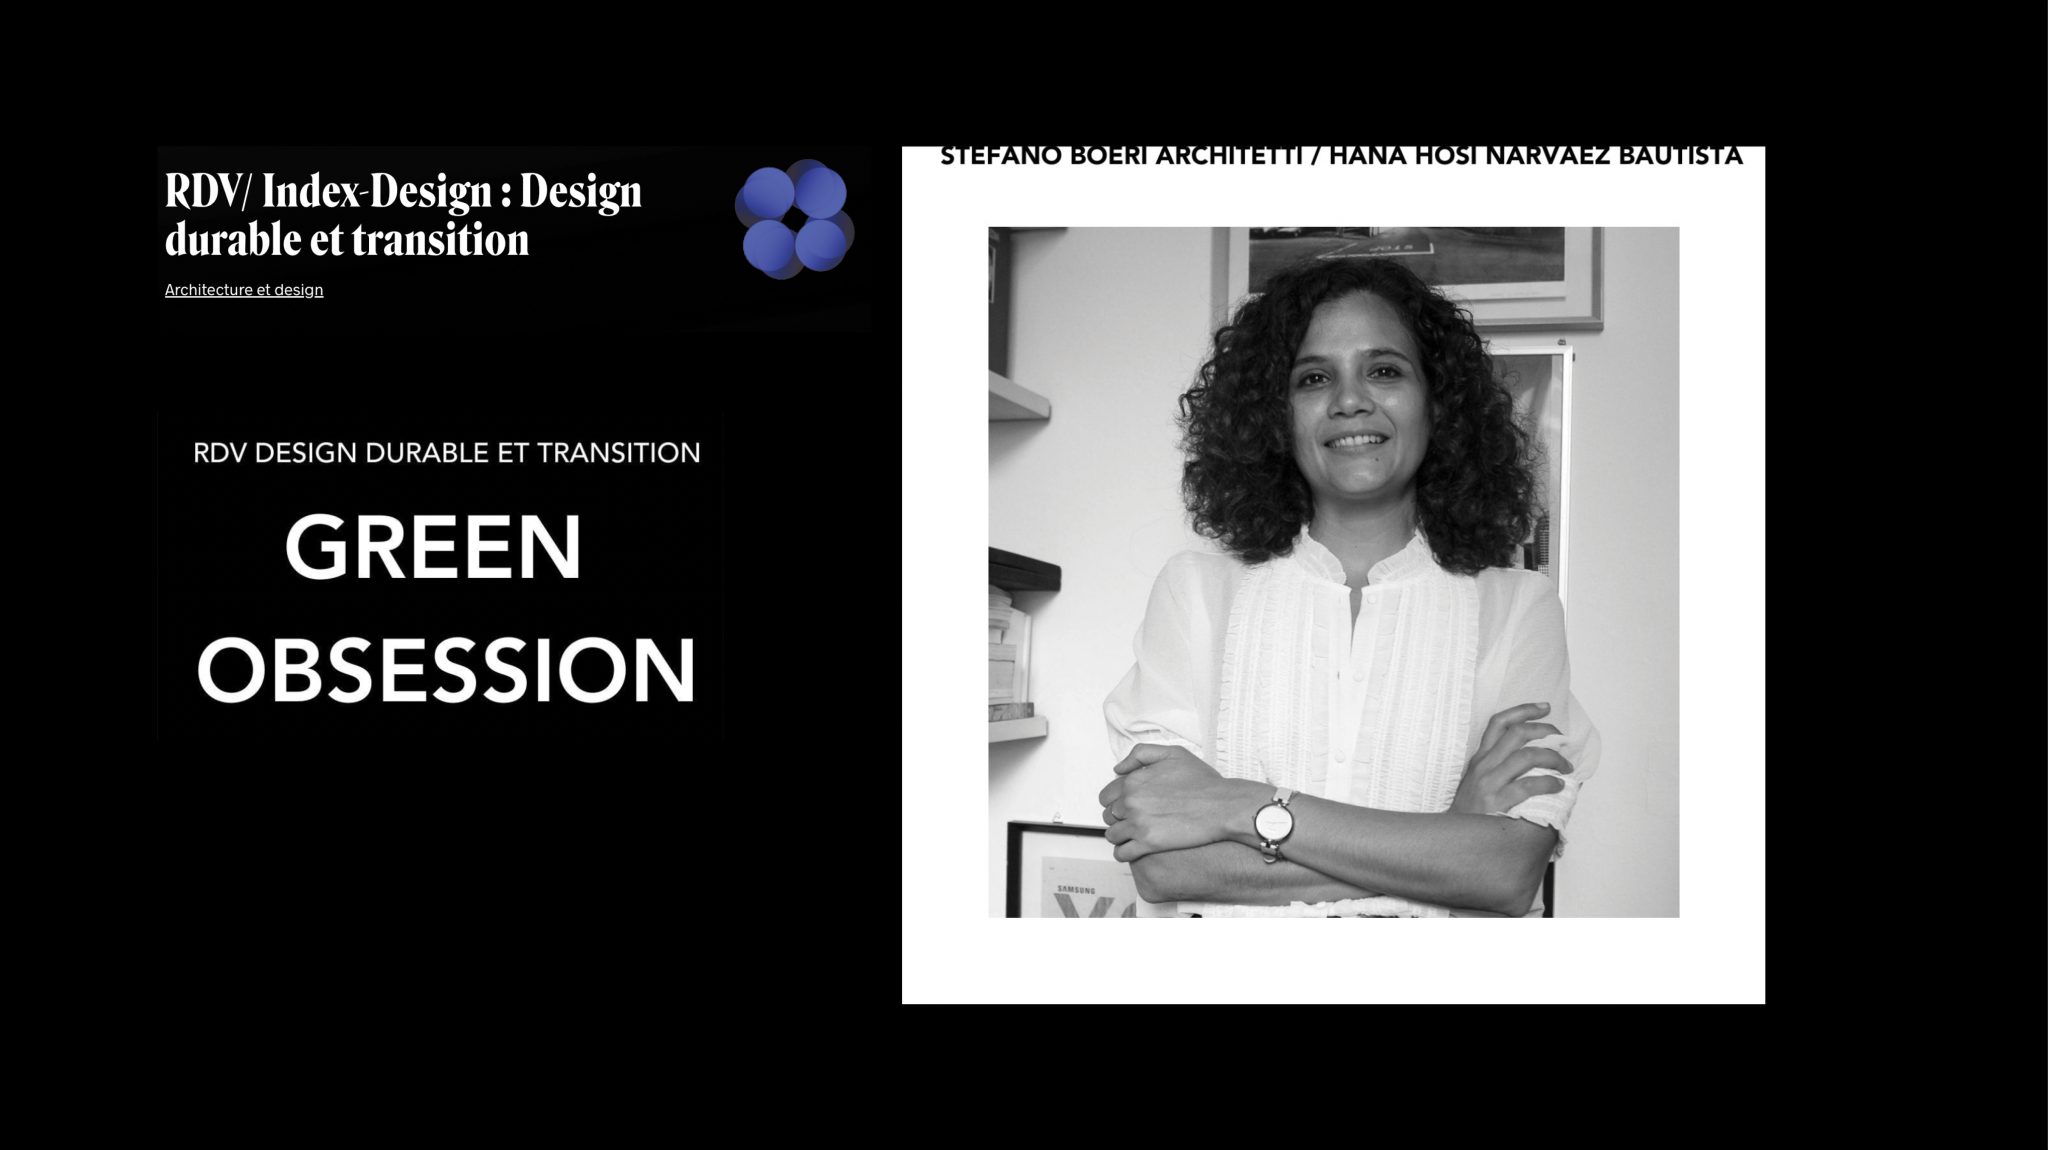 Hana Narvaez al Design durable et transition